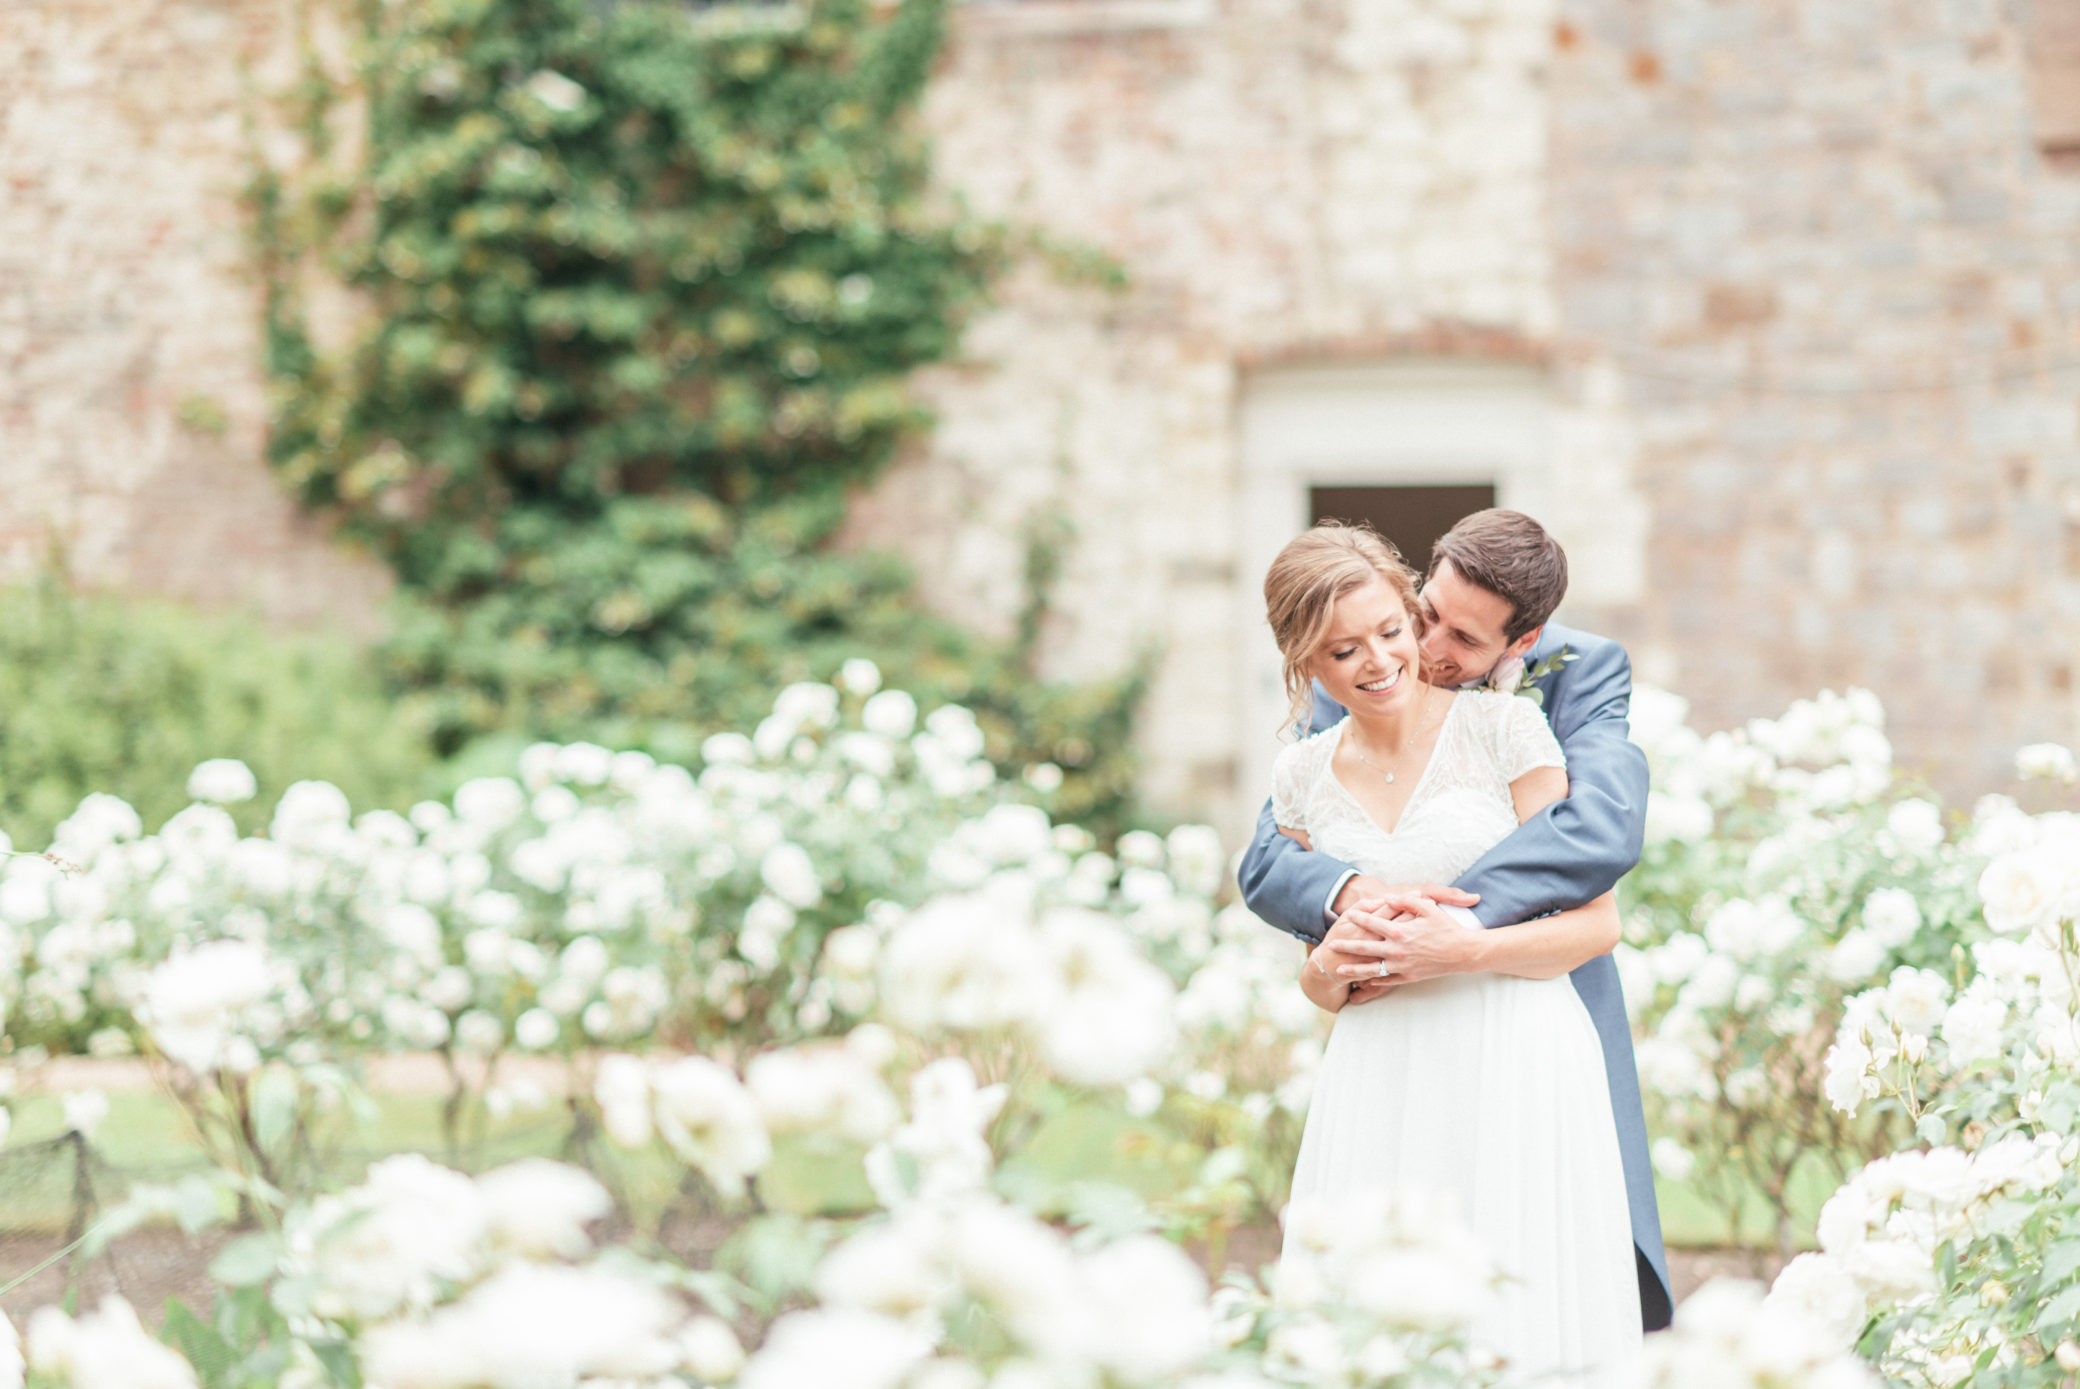 Romantic wedding photography at Farnham Castle in Surrey